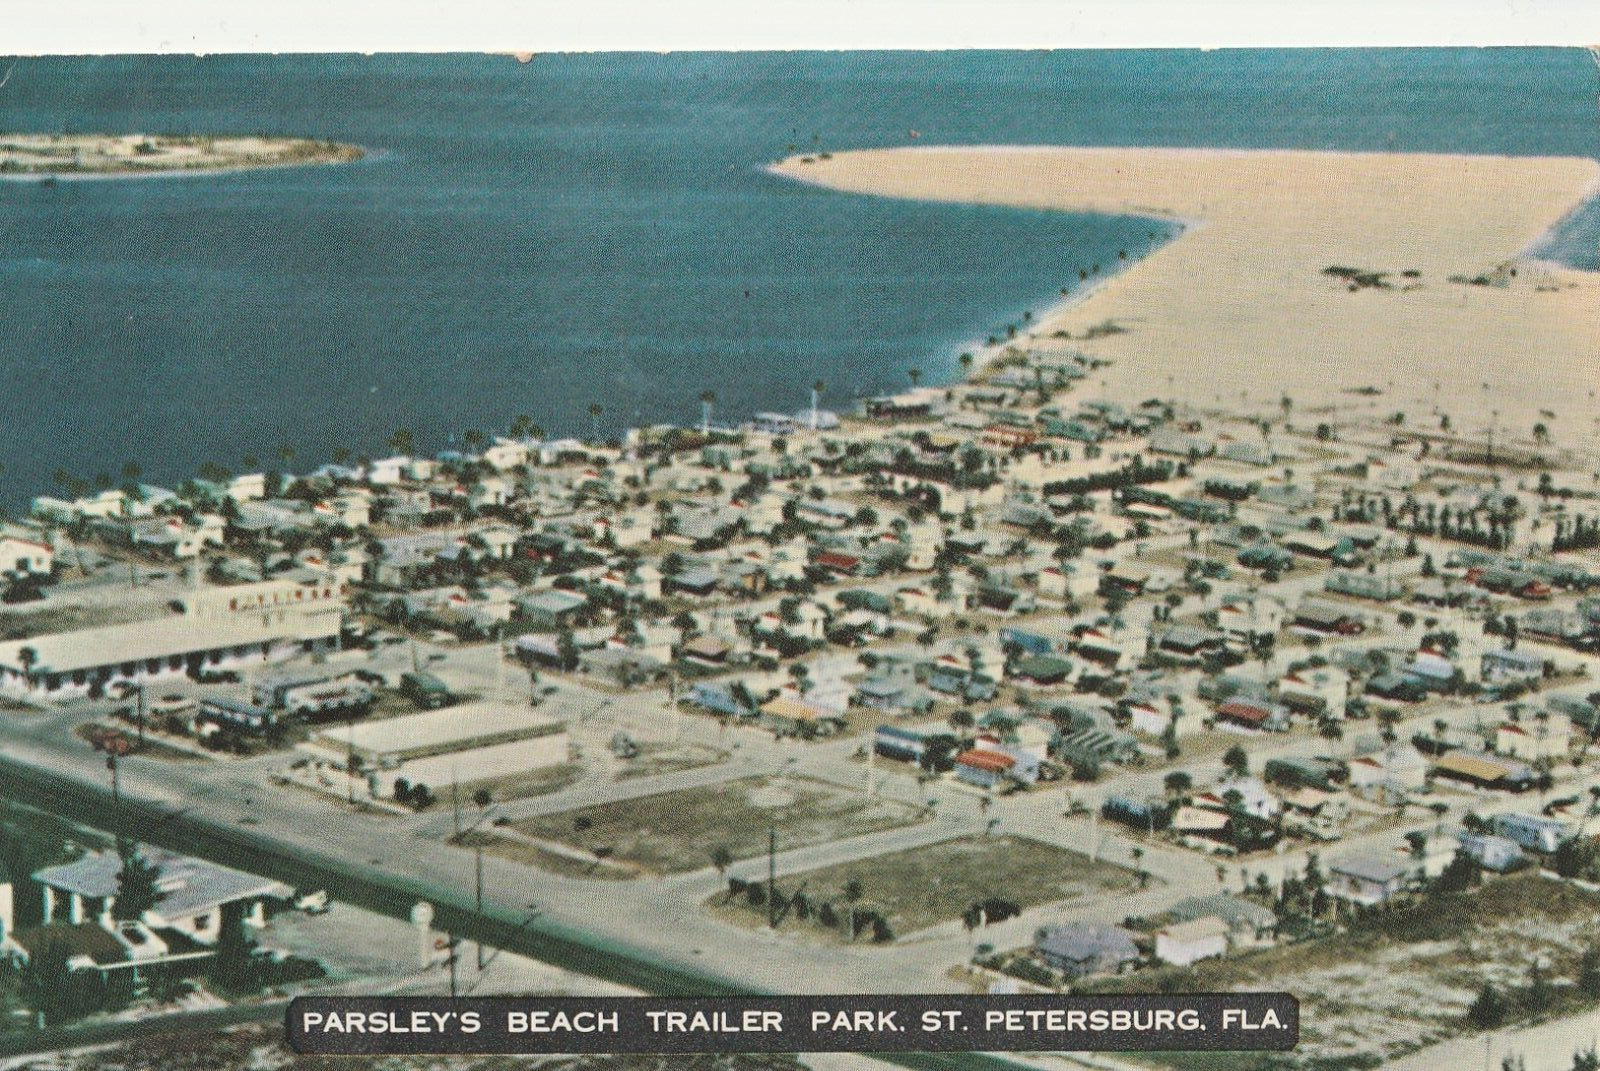 Vintage Postcard Parsley's Beach Trailer Park St. Peterburg, Florida Aerial View